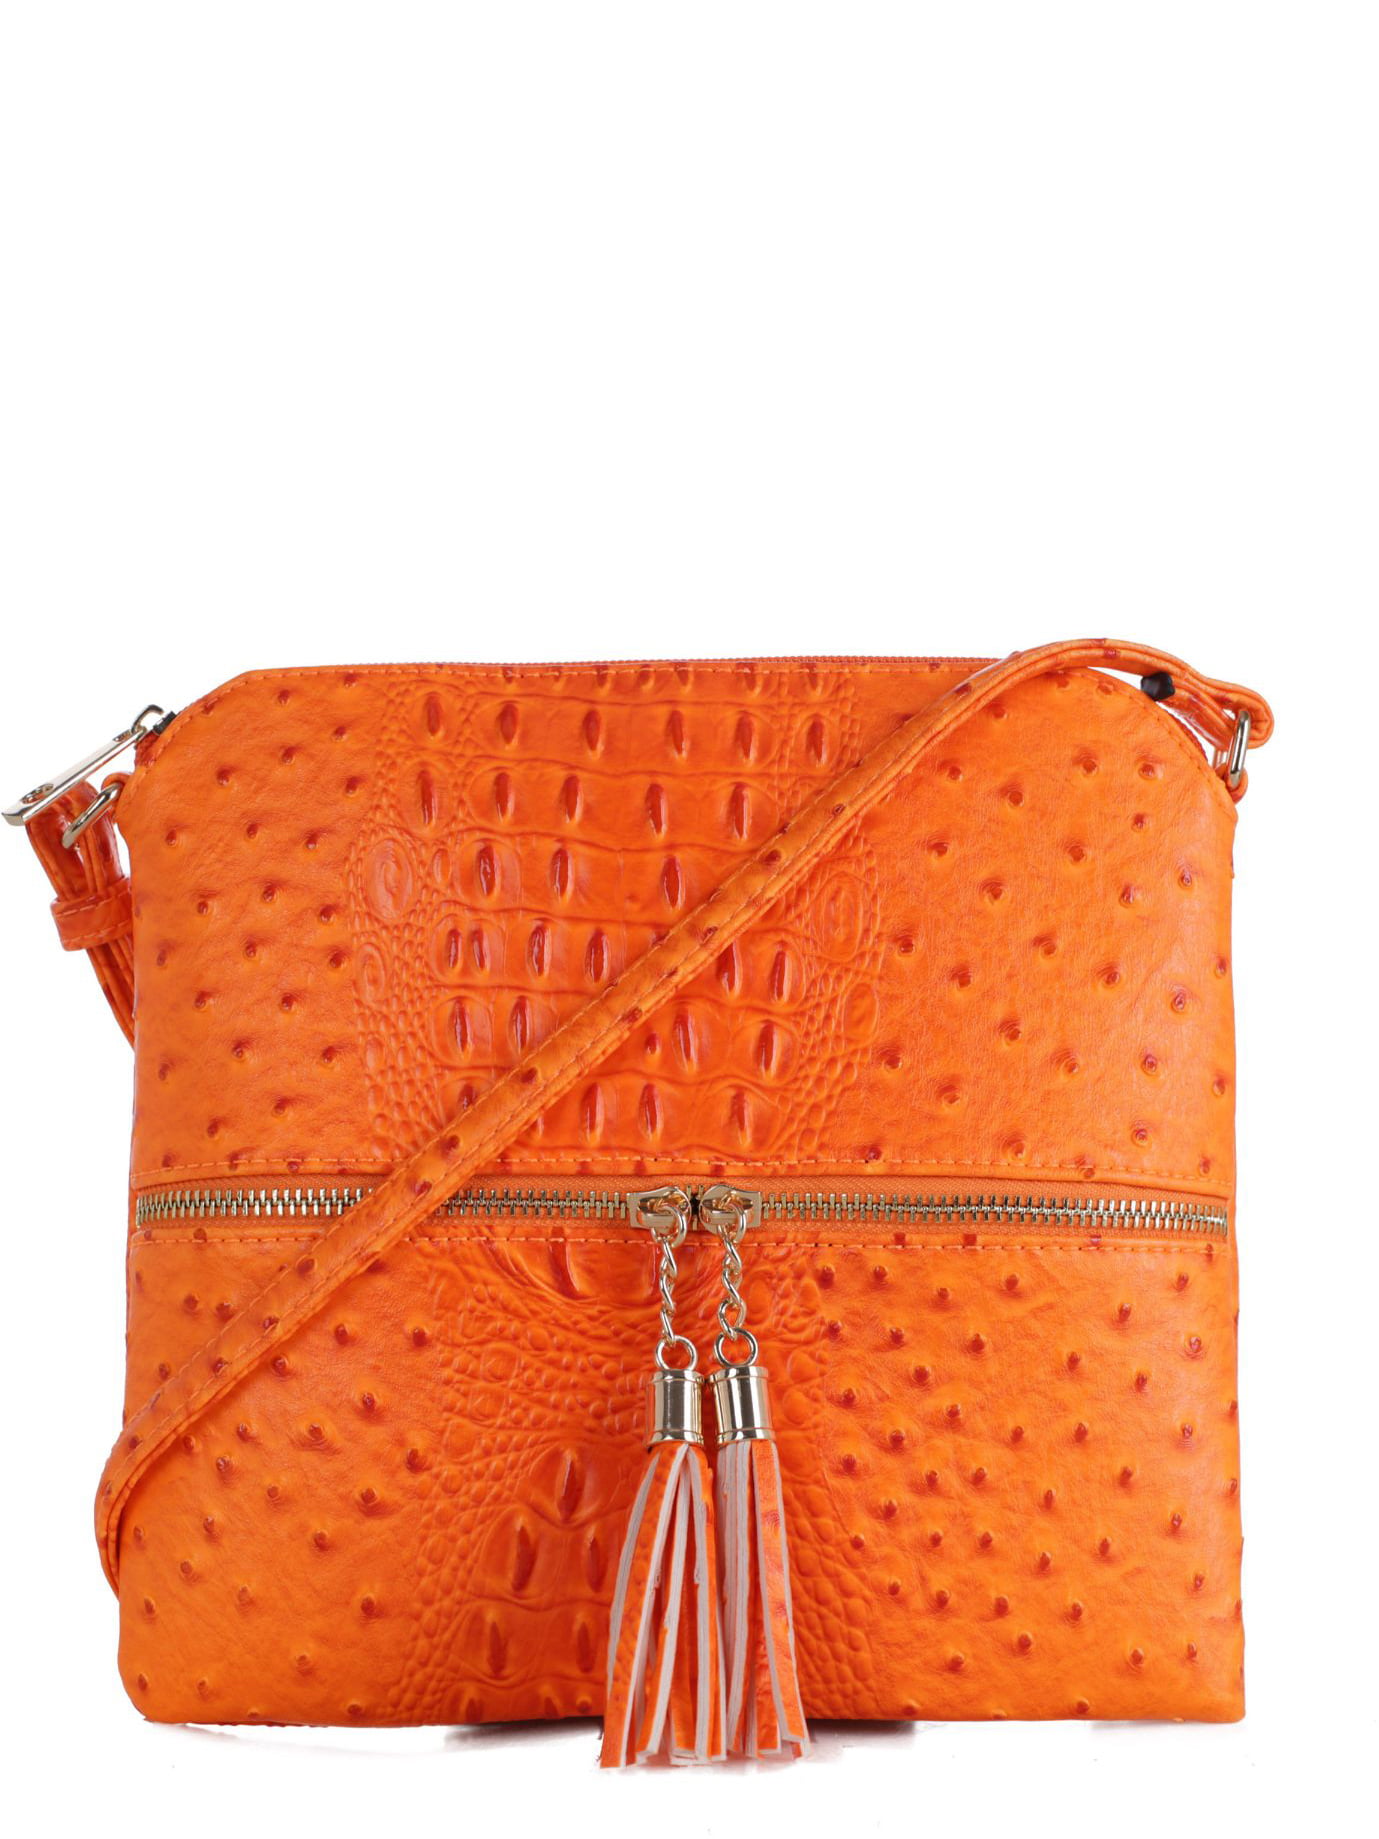 New Genuine Orange Ostrich Leather Skin Women Shoulder Mini Handbag Purse.